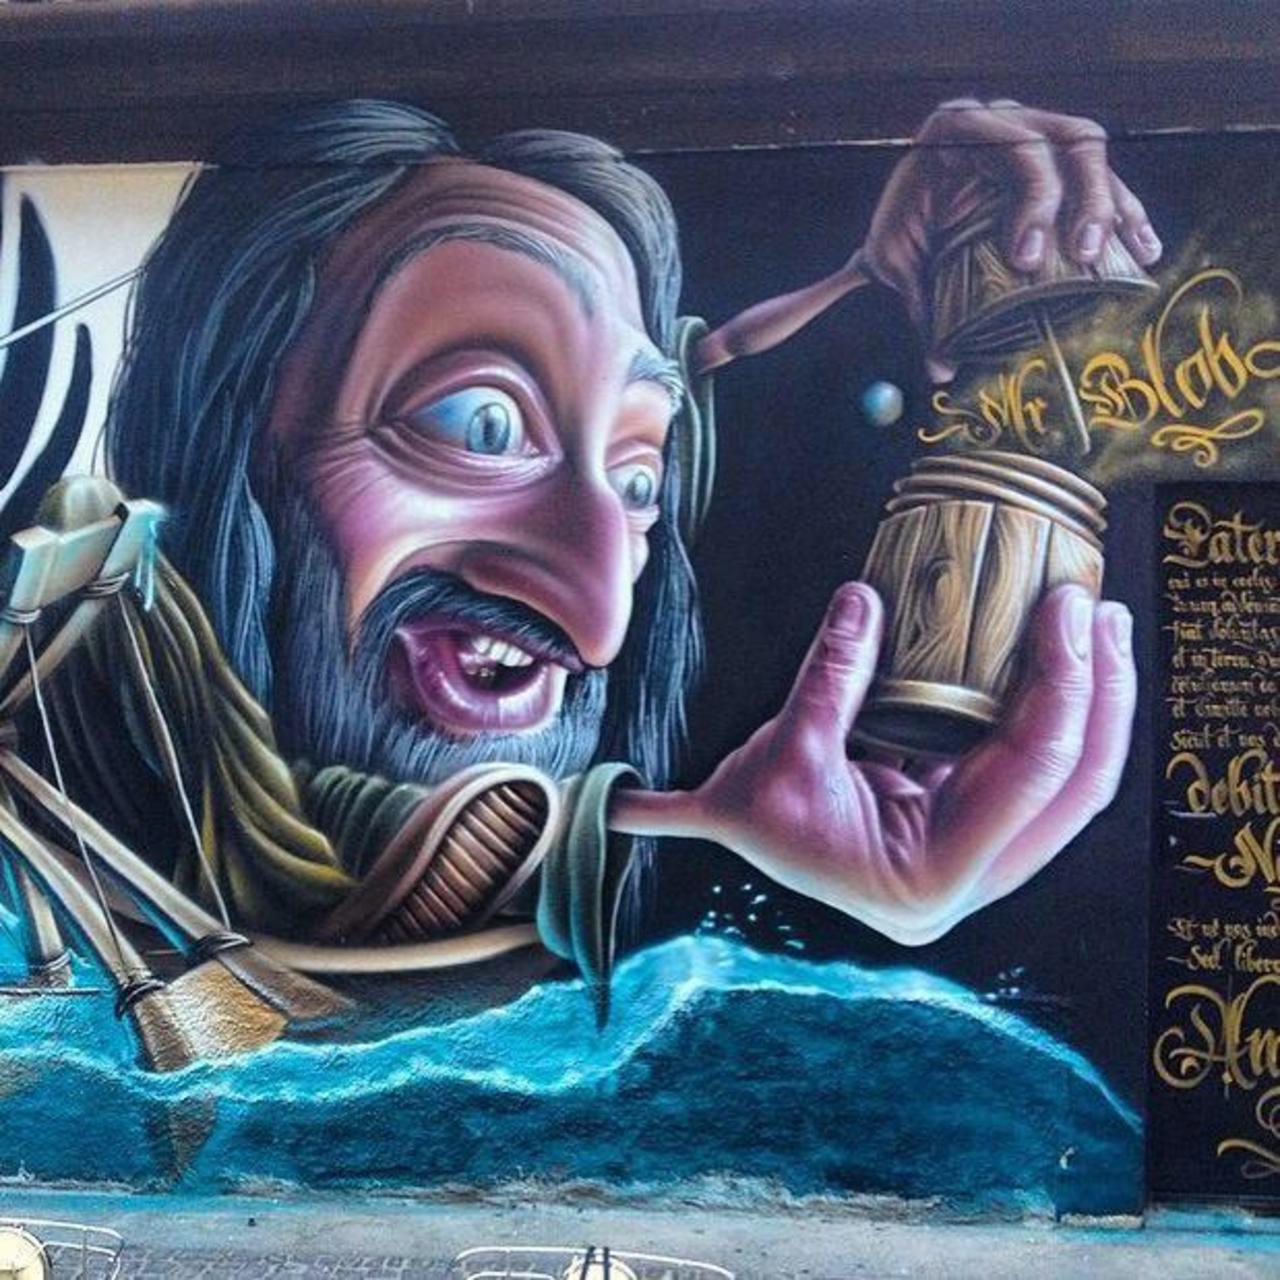 Surreal street art by Mr. Blob. His work is wow: http://bit.ly/1DSvJsW #graffiti #mural https://t.co/Wx0B4ZWzC7